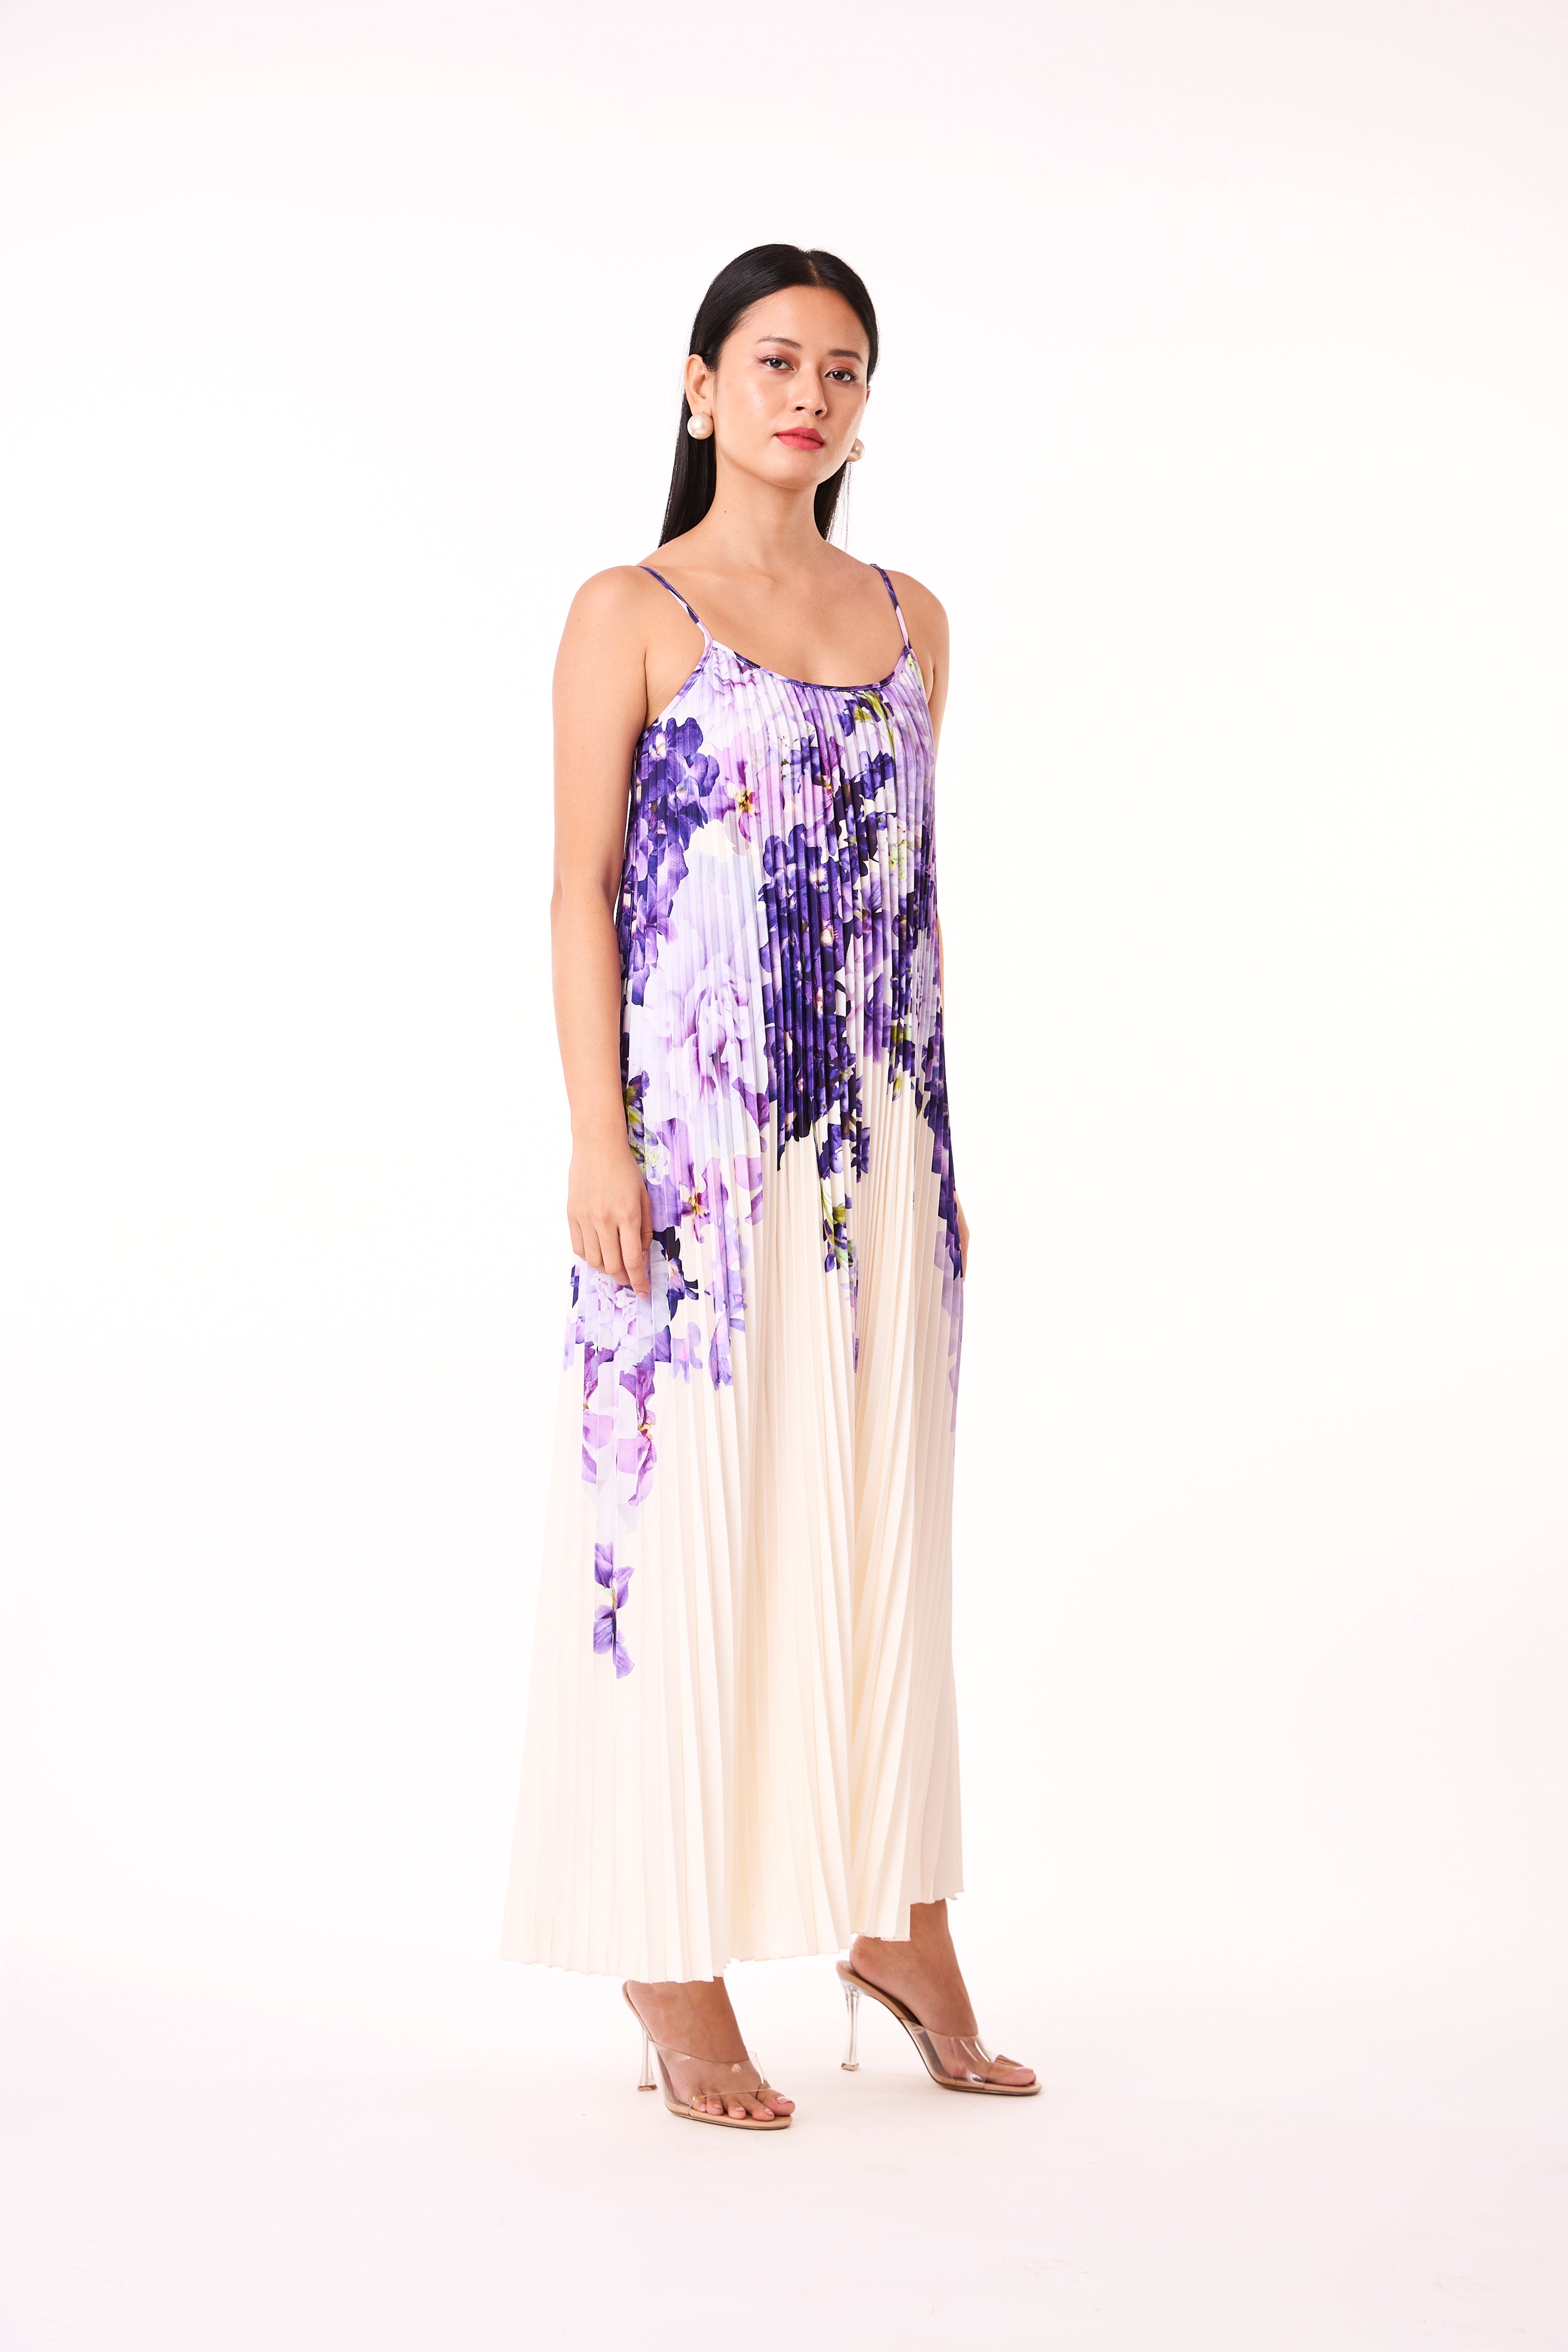 Olivia Floral Slip Dress - Cream